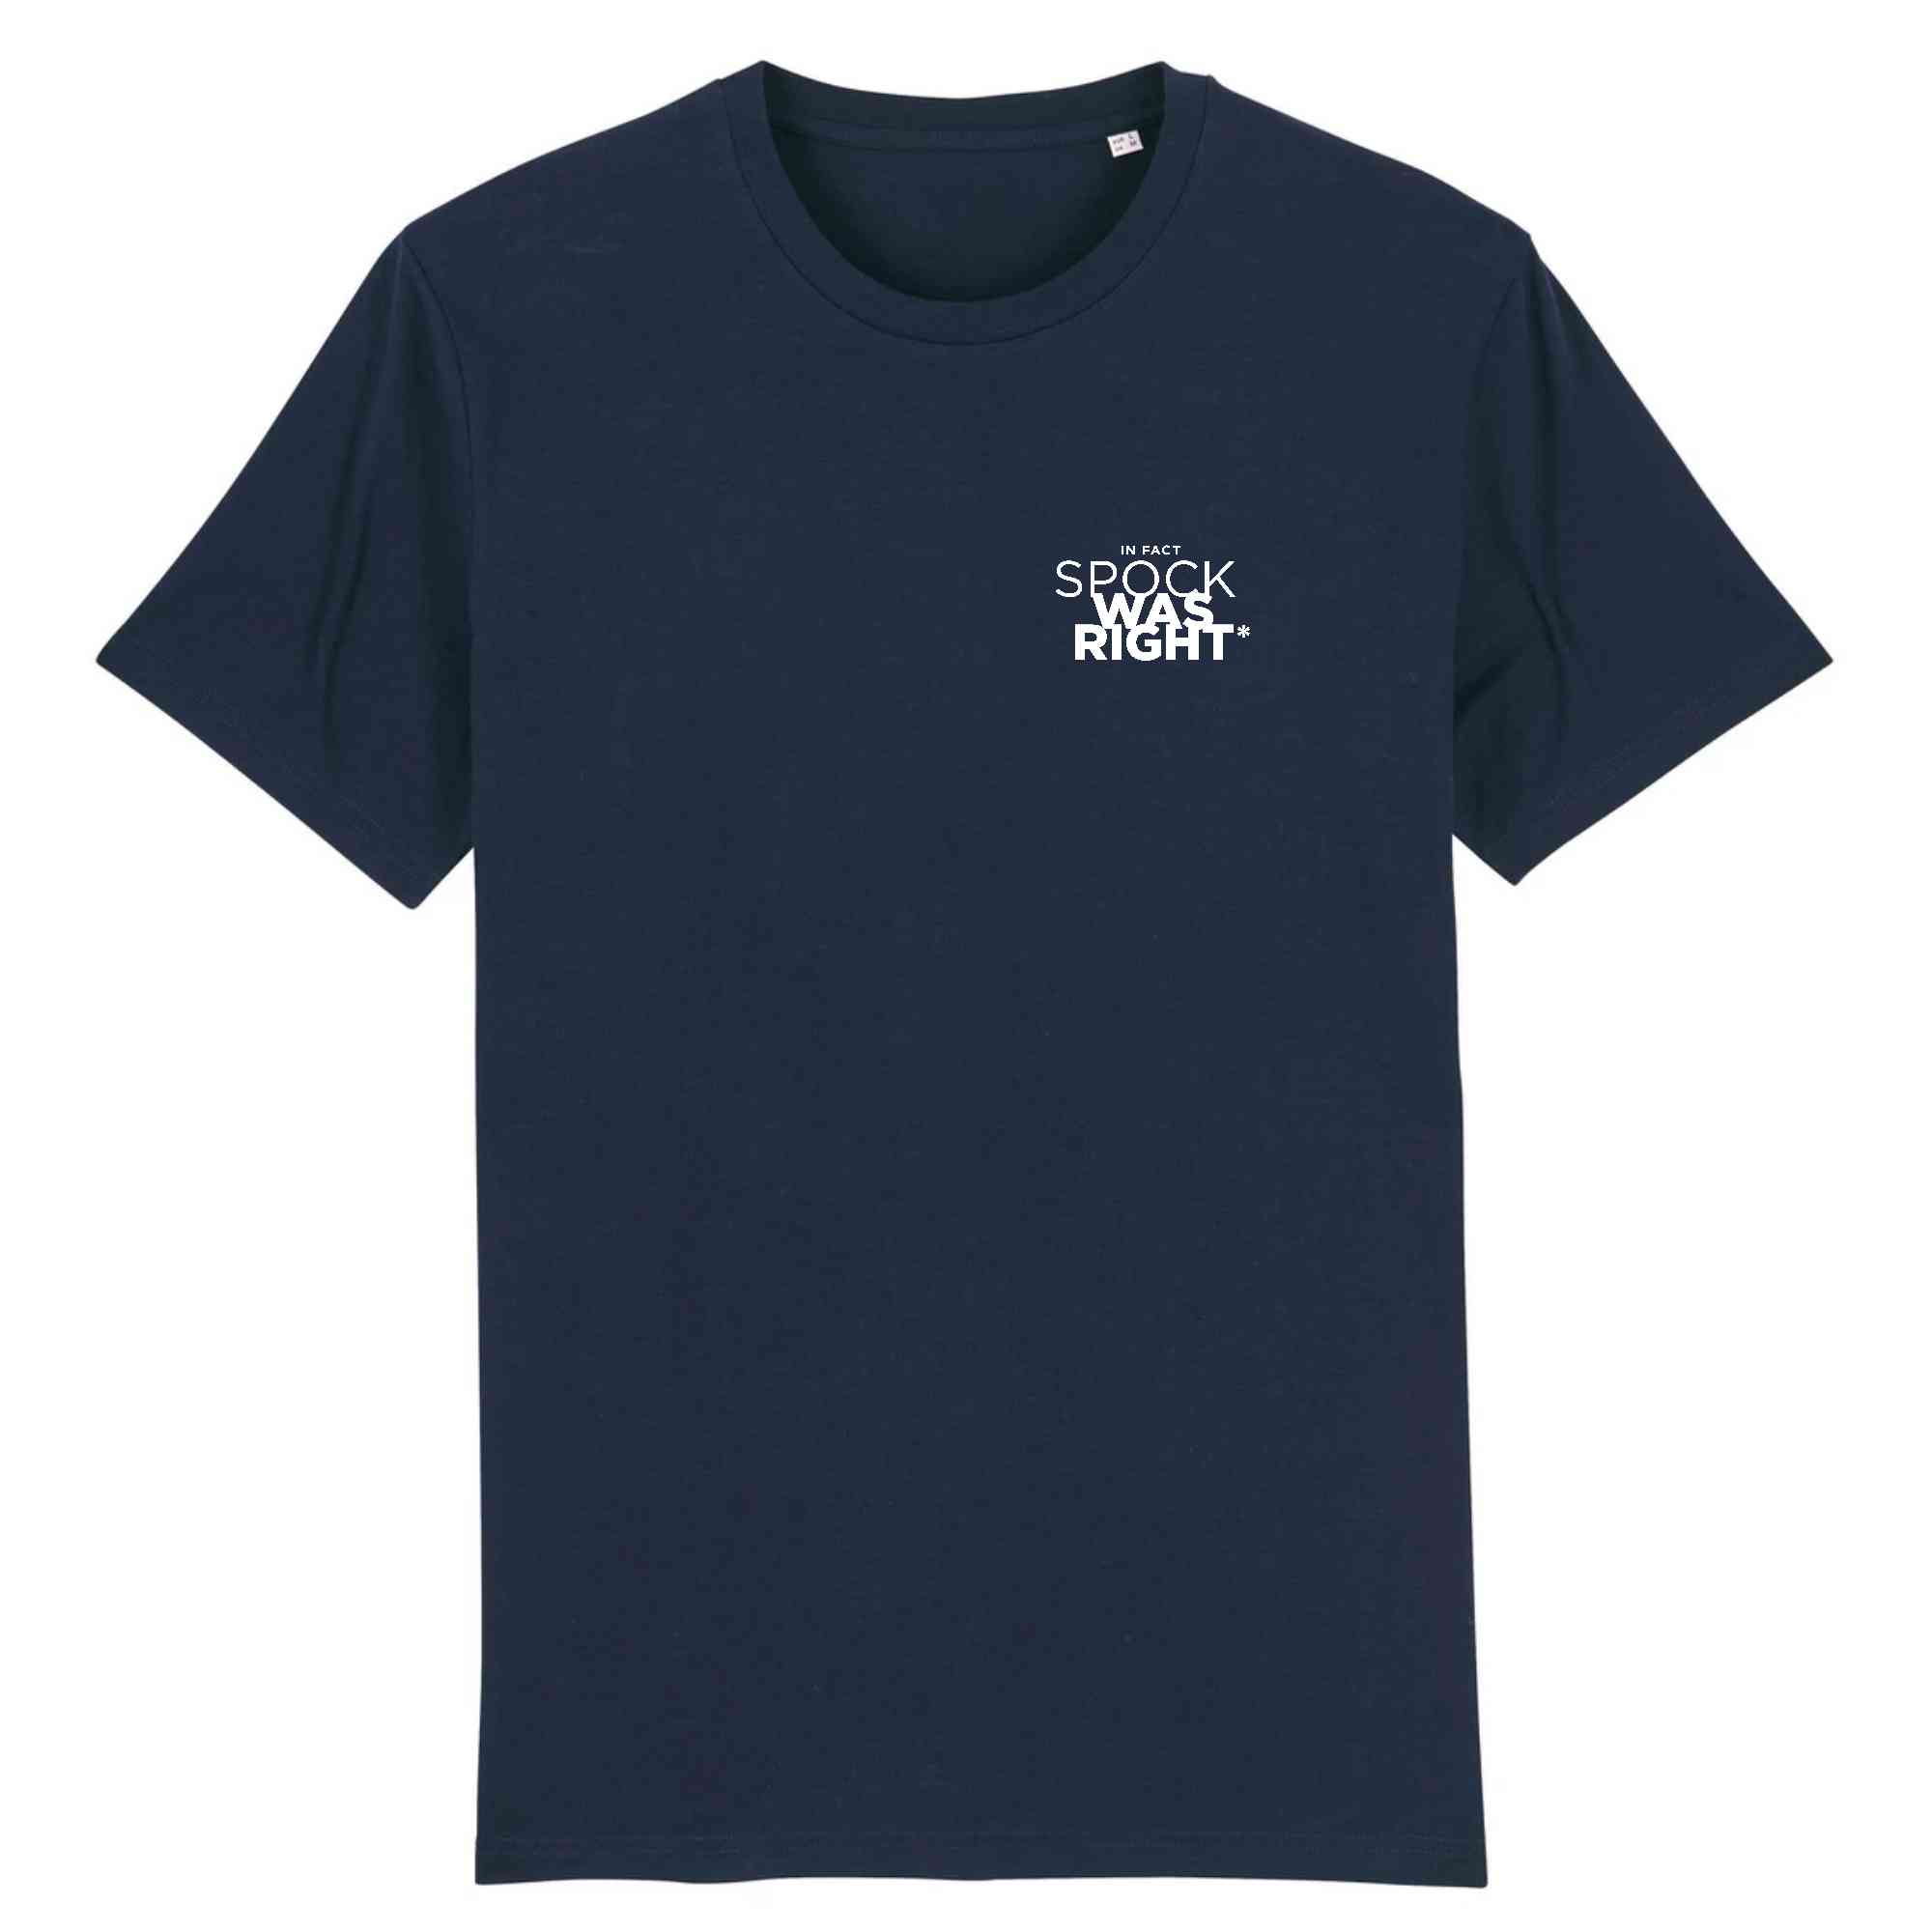 T-shirt bleu unisexe SPOCK WAS RIGHT - Spock avait raison collection sweat inspirant